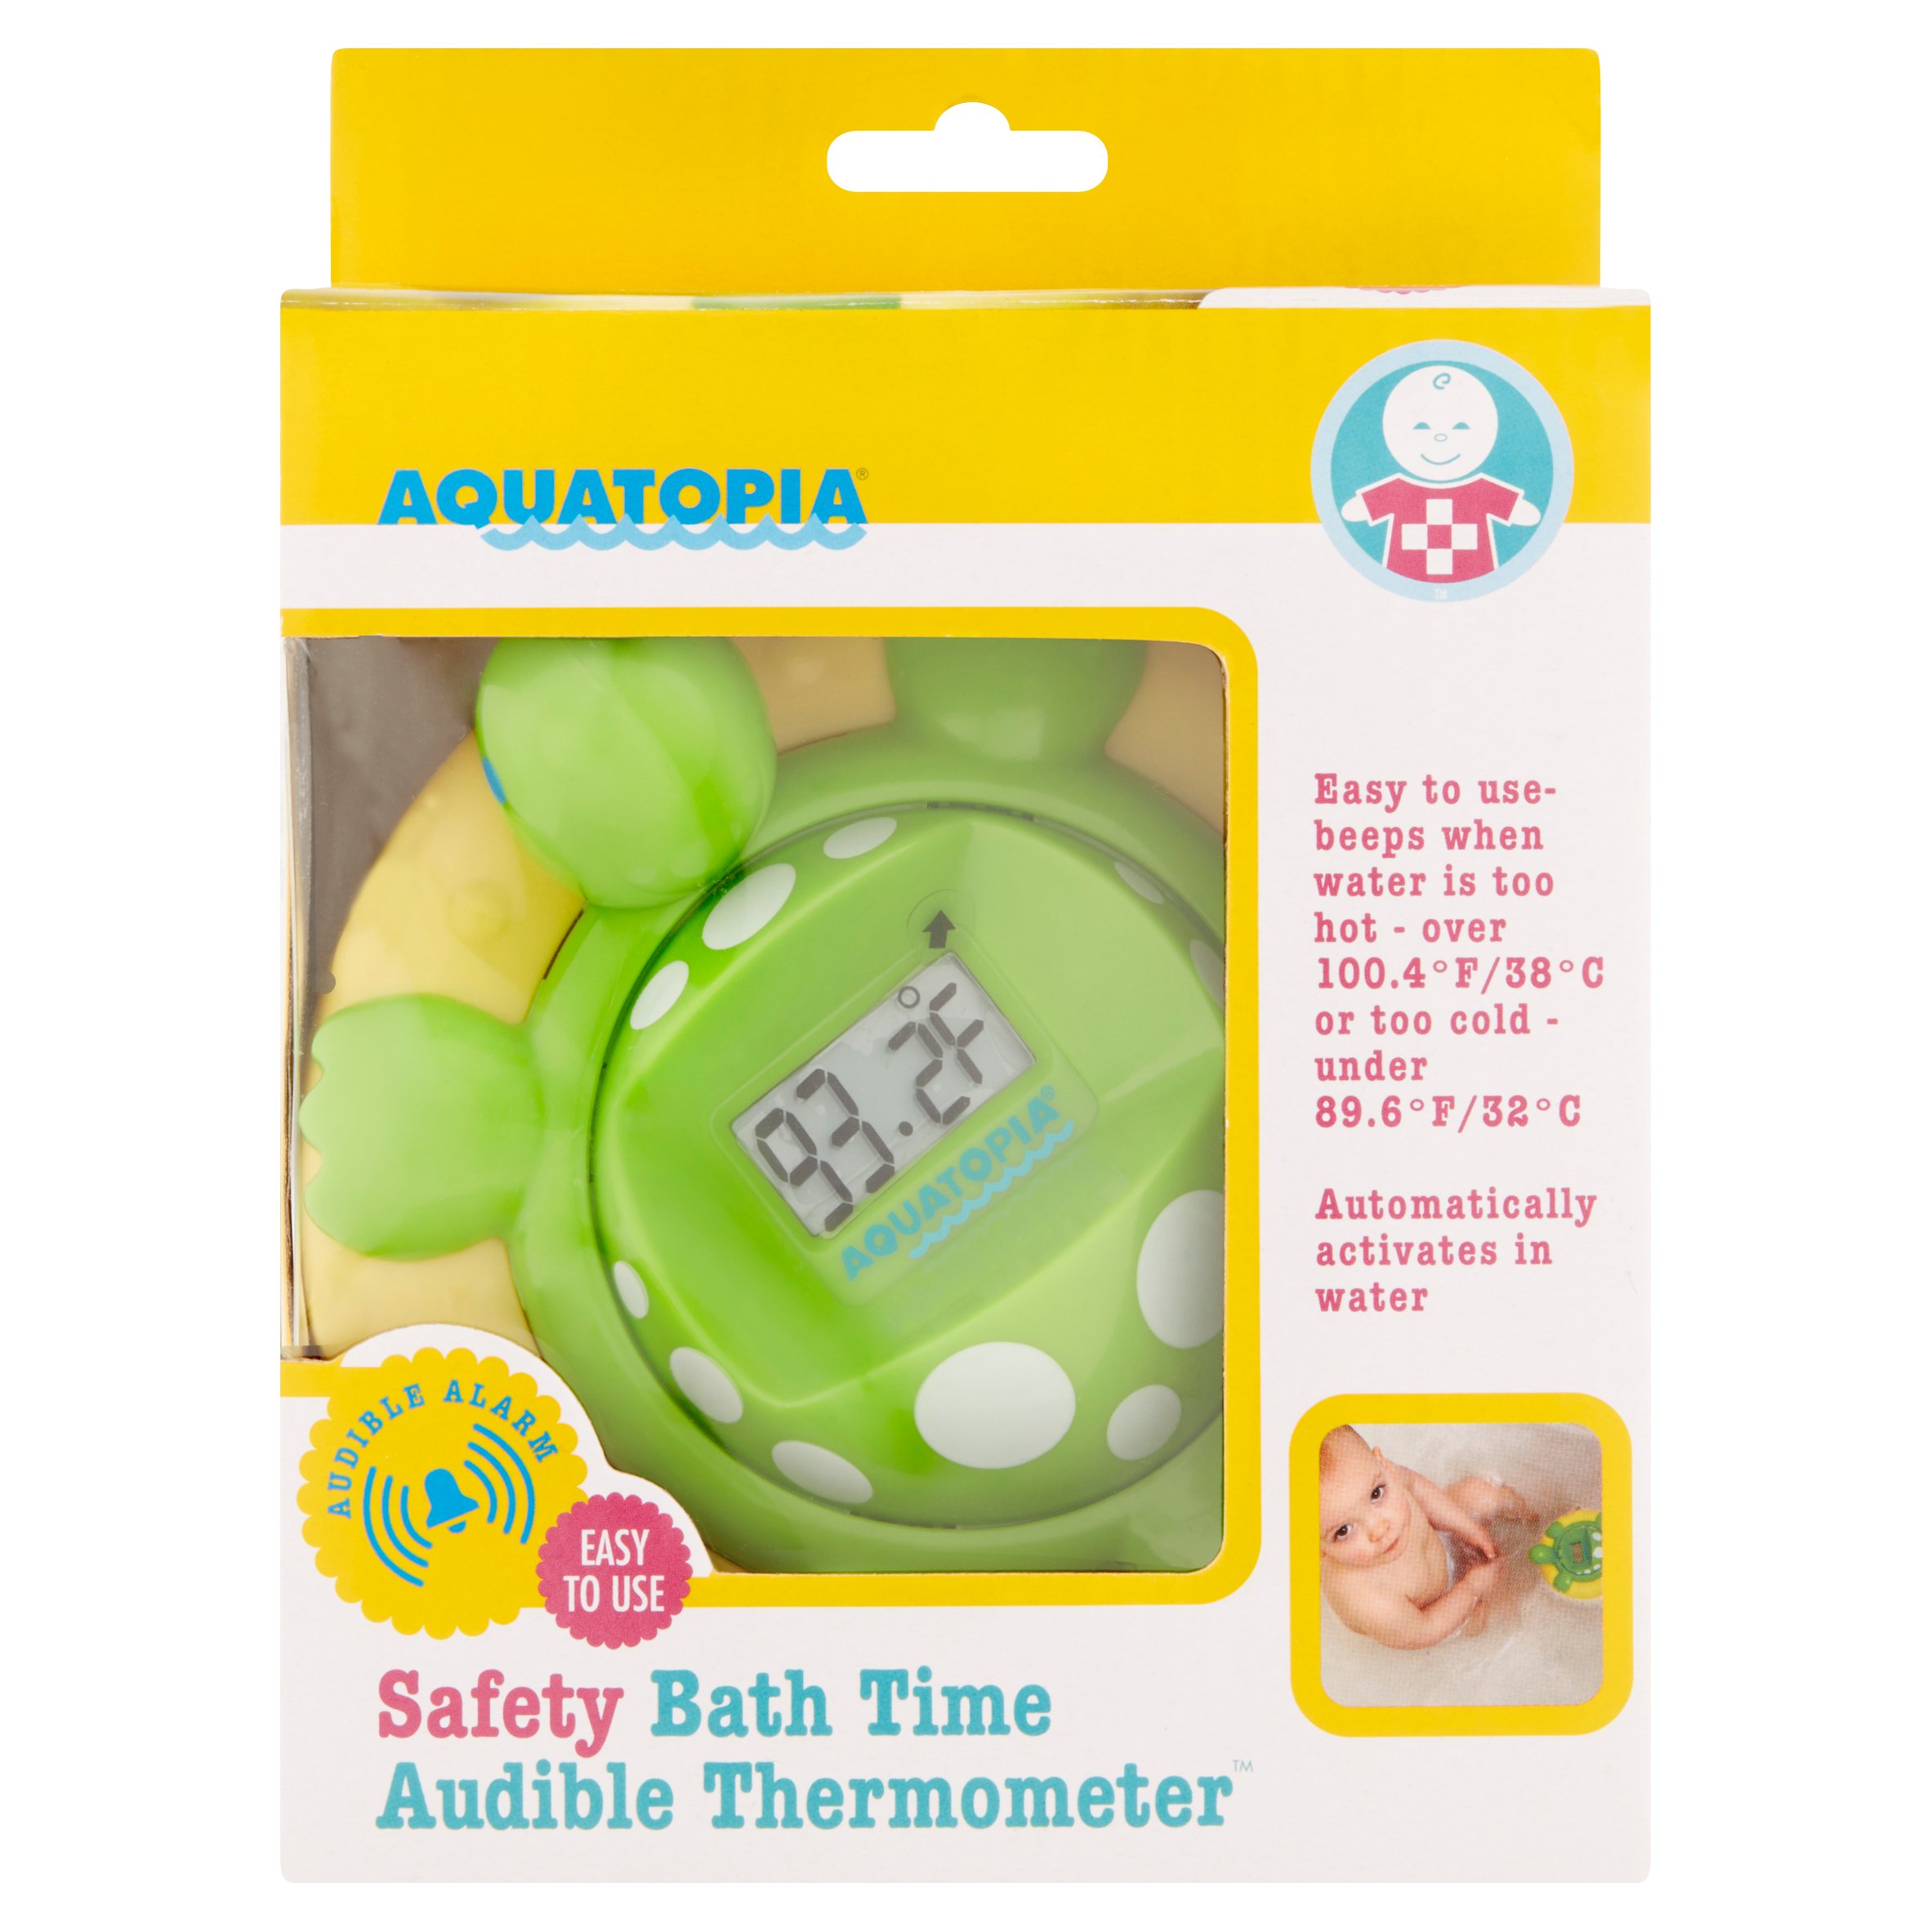 Aquatopia Bath Thermometer, Digital Audible Alarm, Green - image 4 of 6